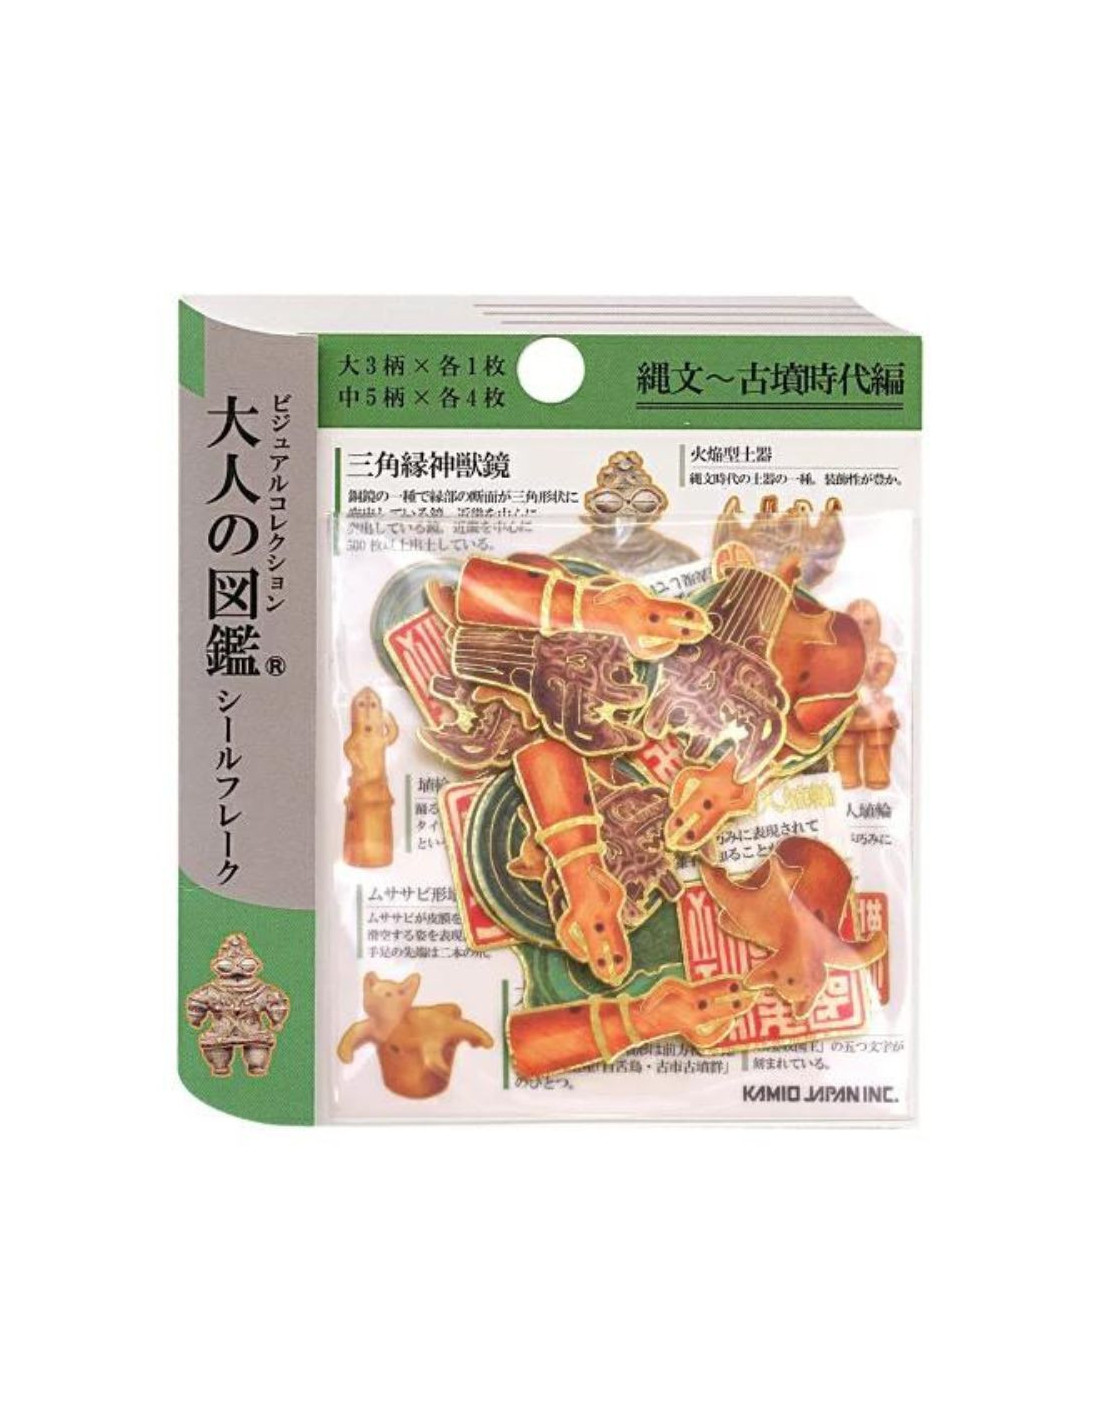 Otonano-zukan Flake Stickers - From Jōmon to Kofun periods - Kamio Japan